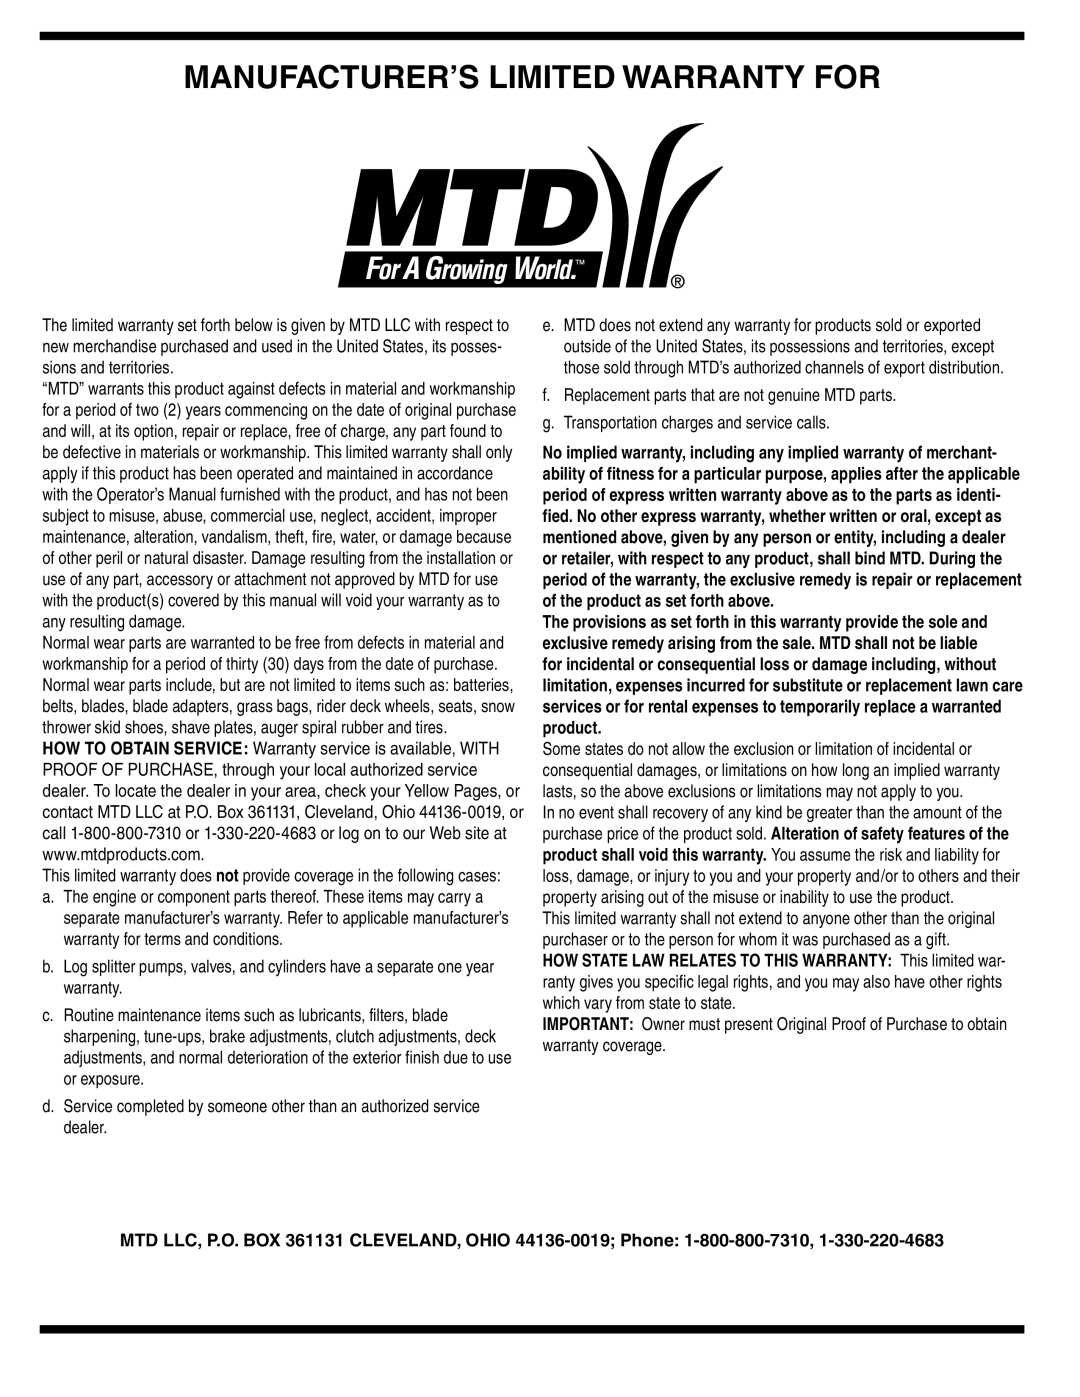 MTD 584 warranty Manufacturer’S Limited Warranty For 